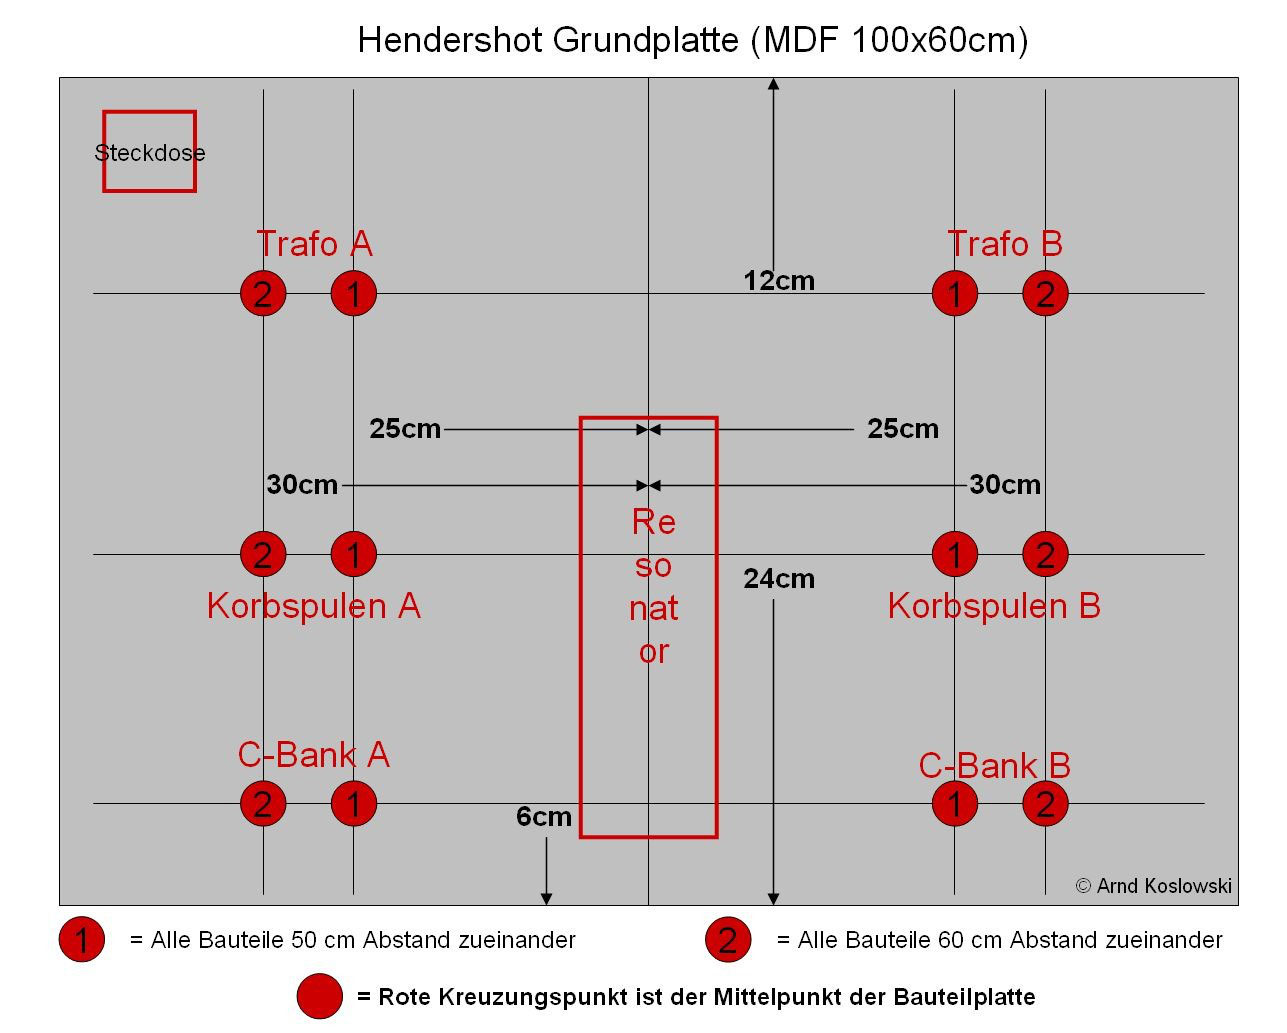 Hendershot Grundplatte - Maßangaben